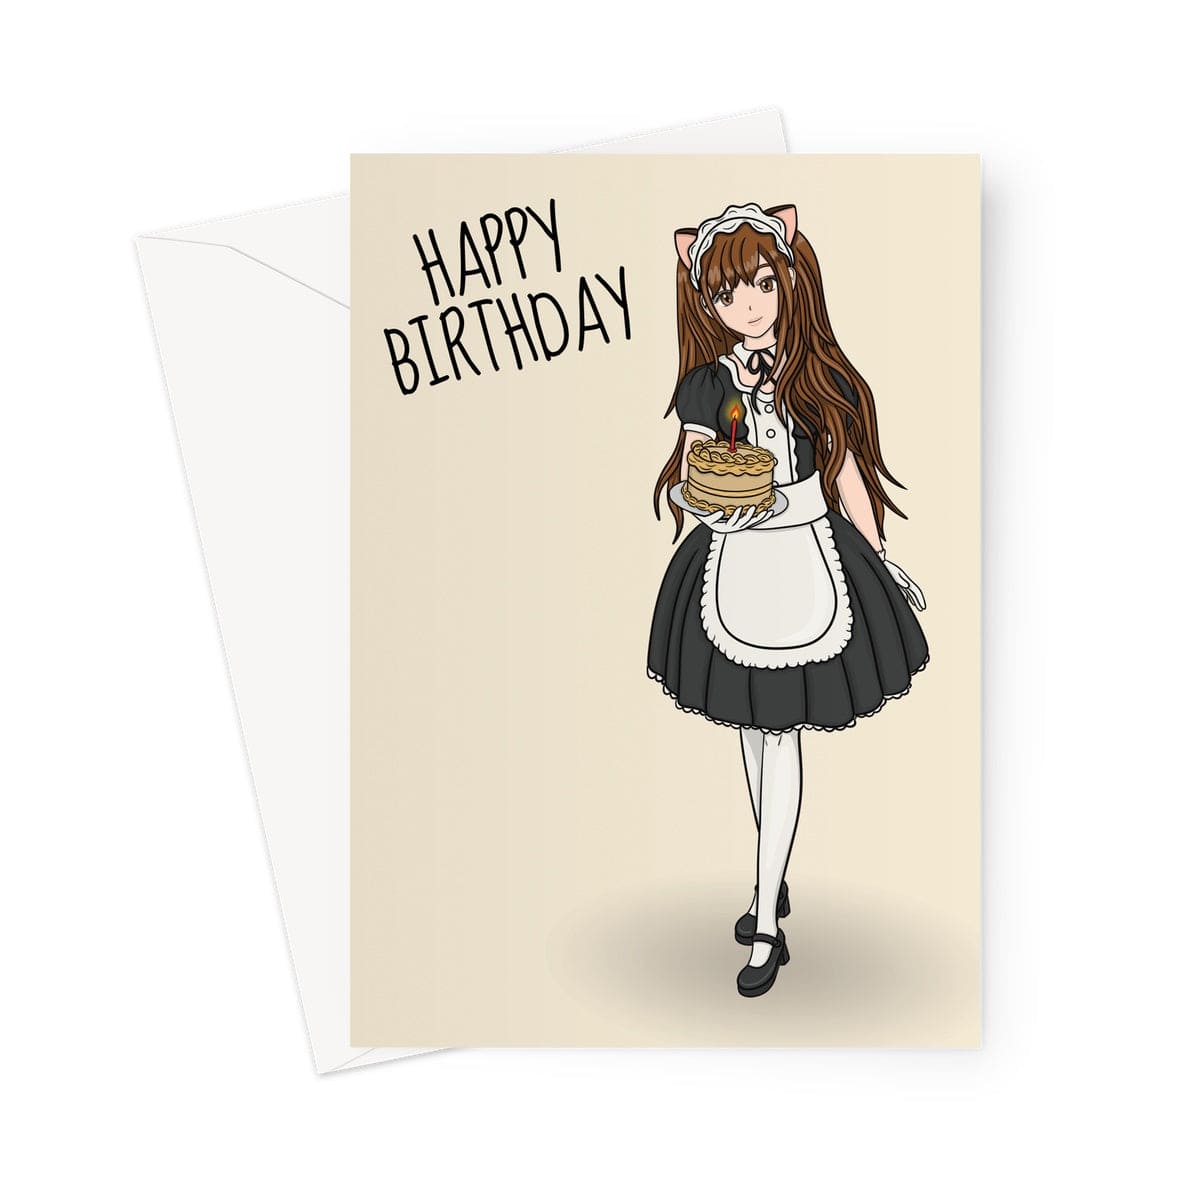 Anime Birthday Images - Free Download on Freepik